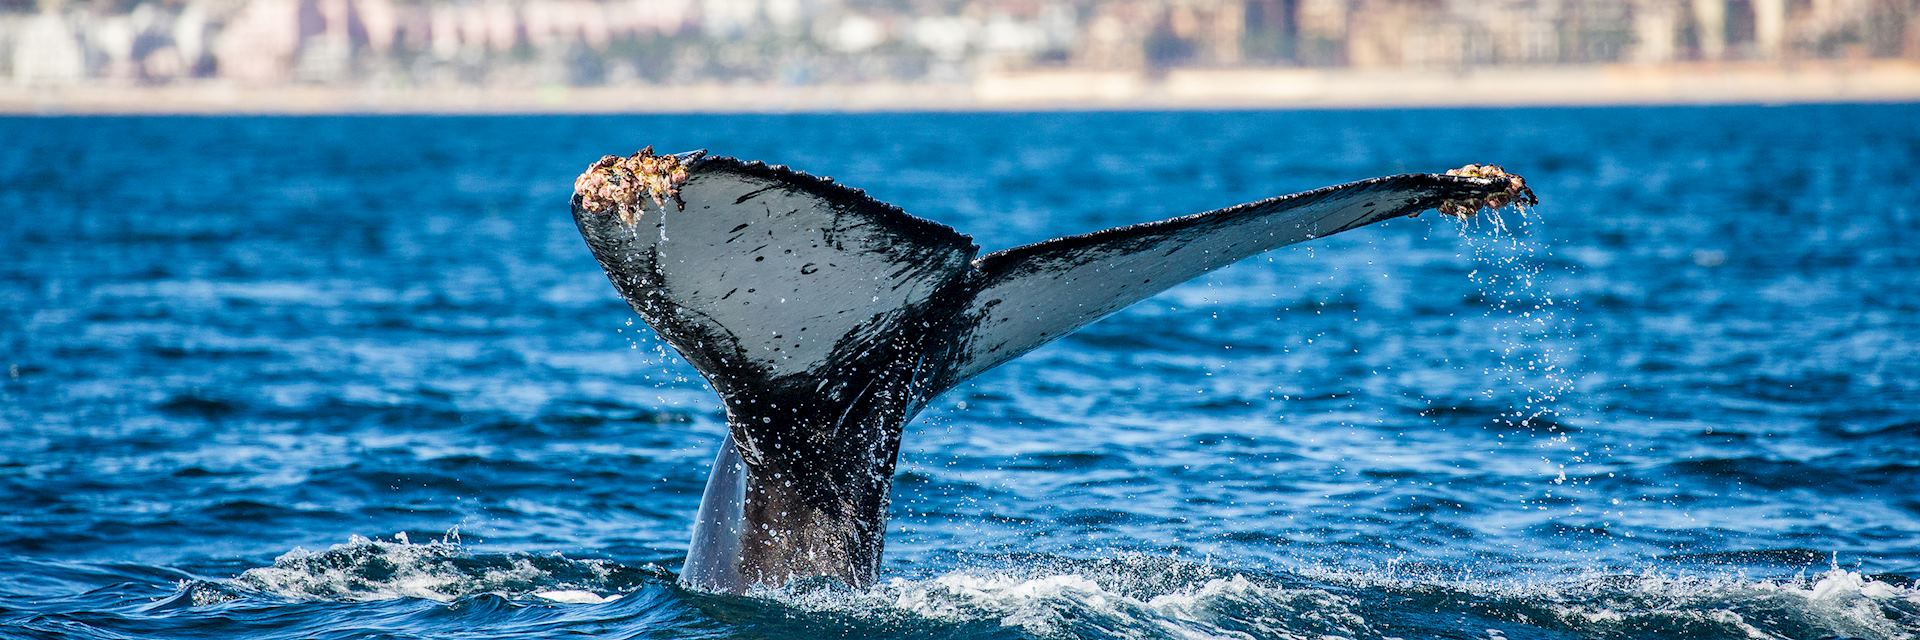 Humpback whale, Baja California